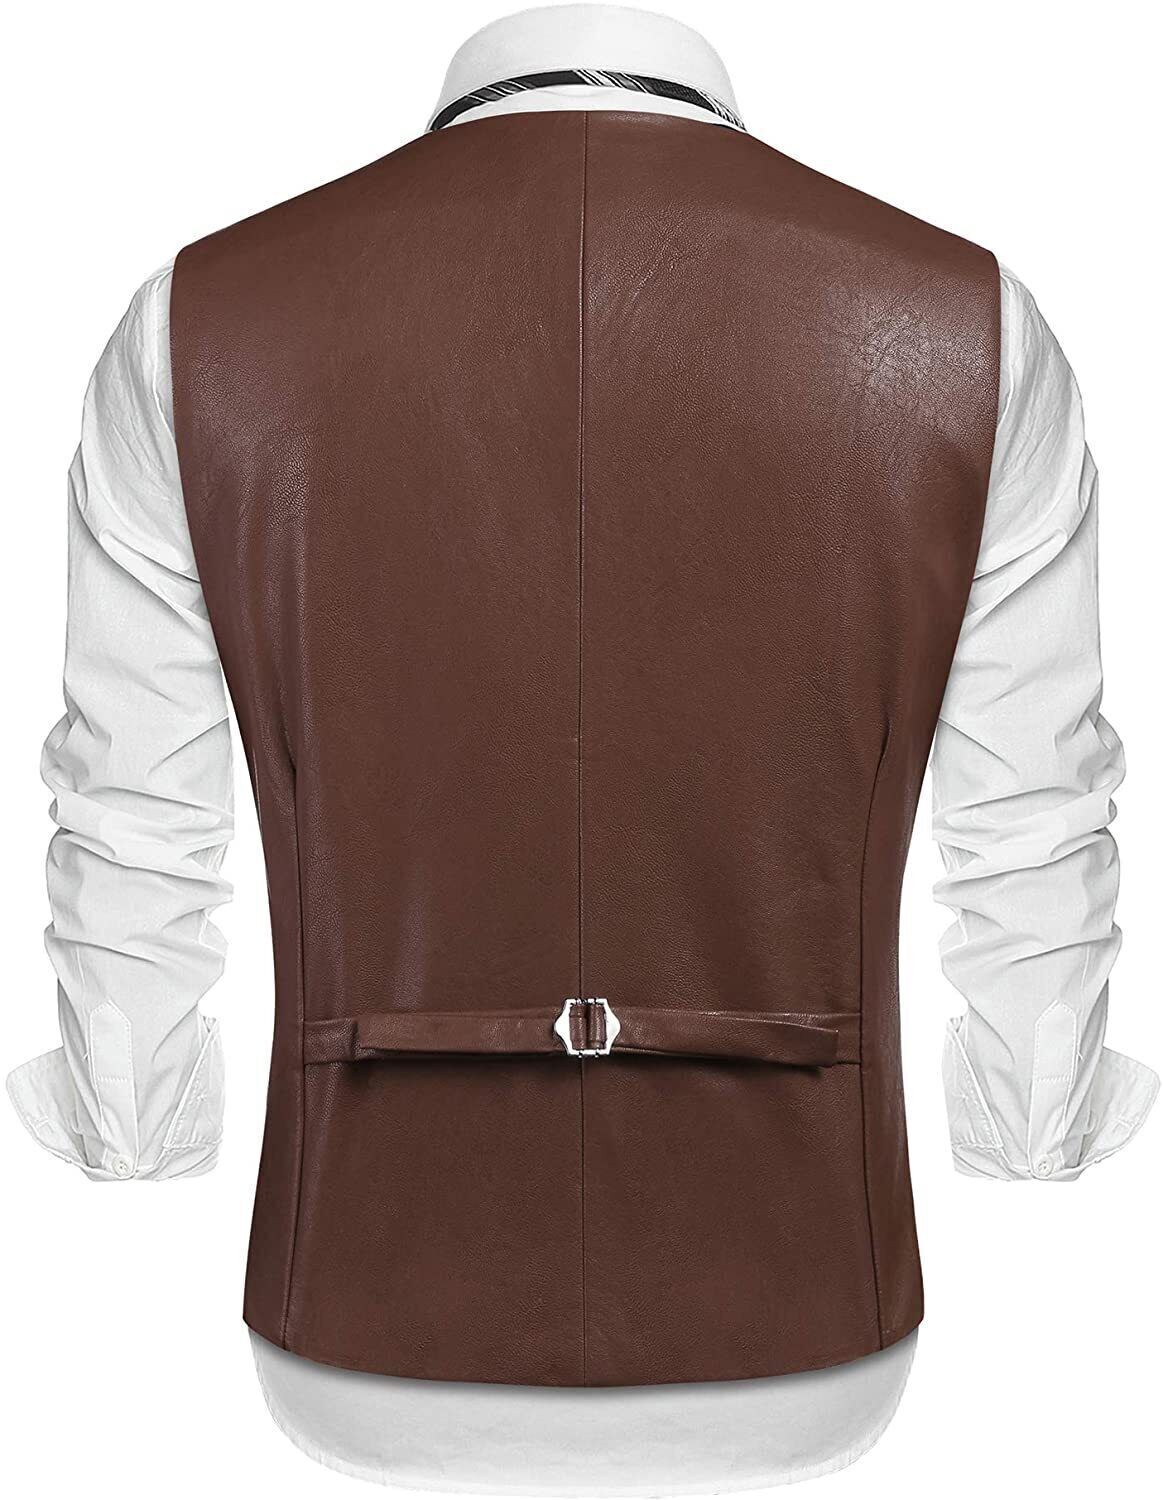 Authentic Genuine Men's Brown Leather Vest